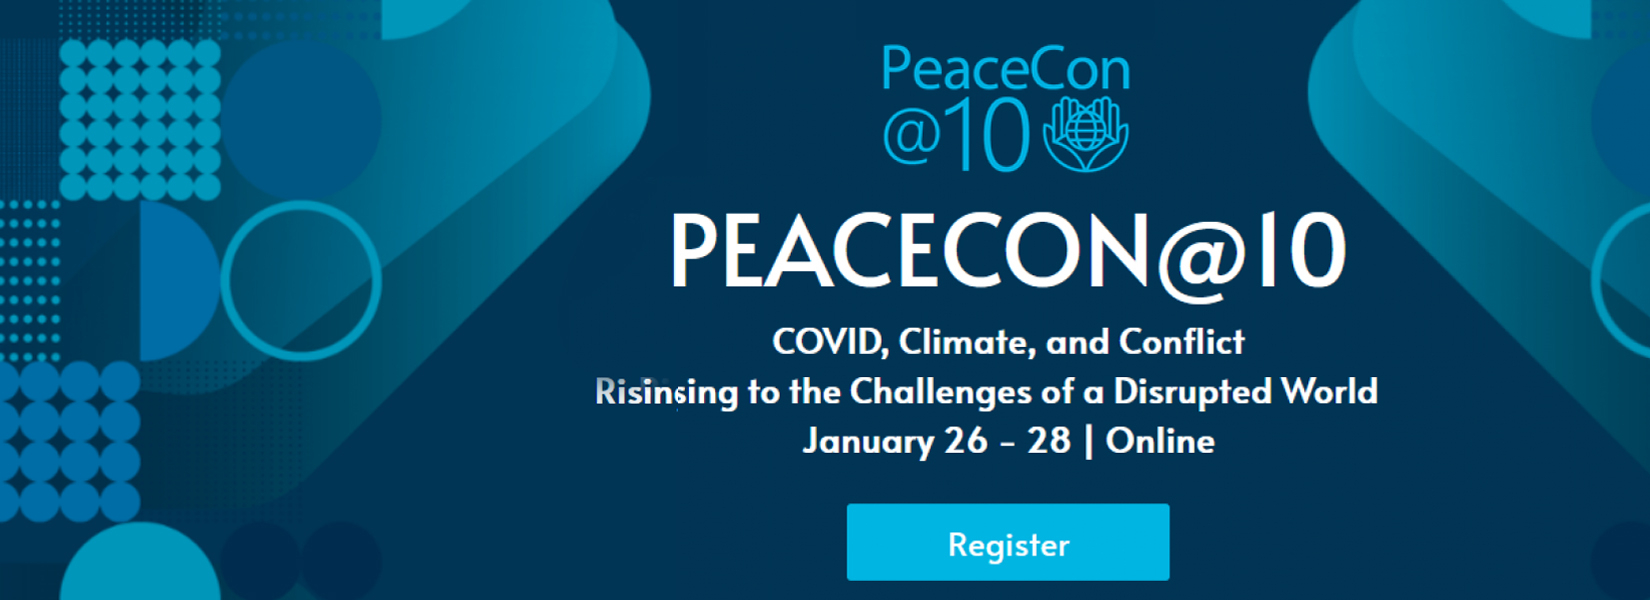 PeaceCon slider homepage